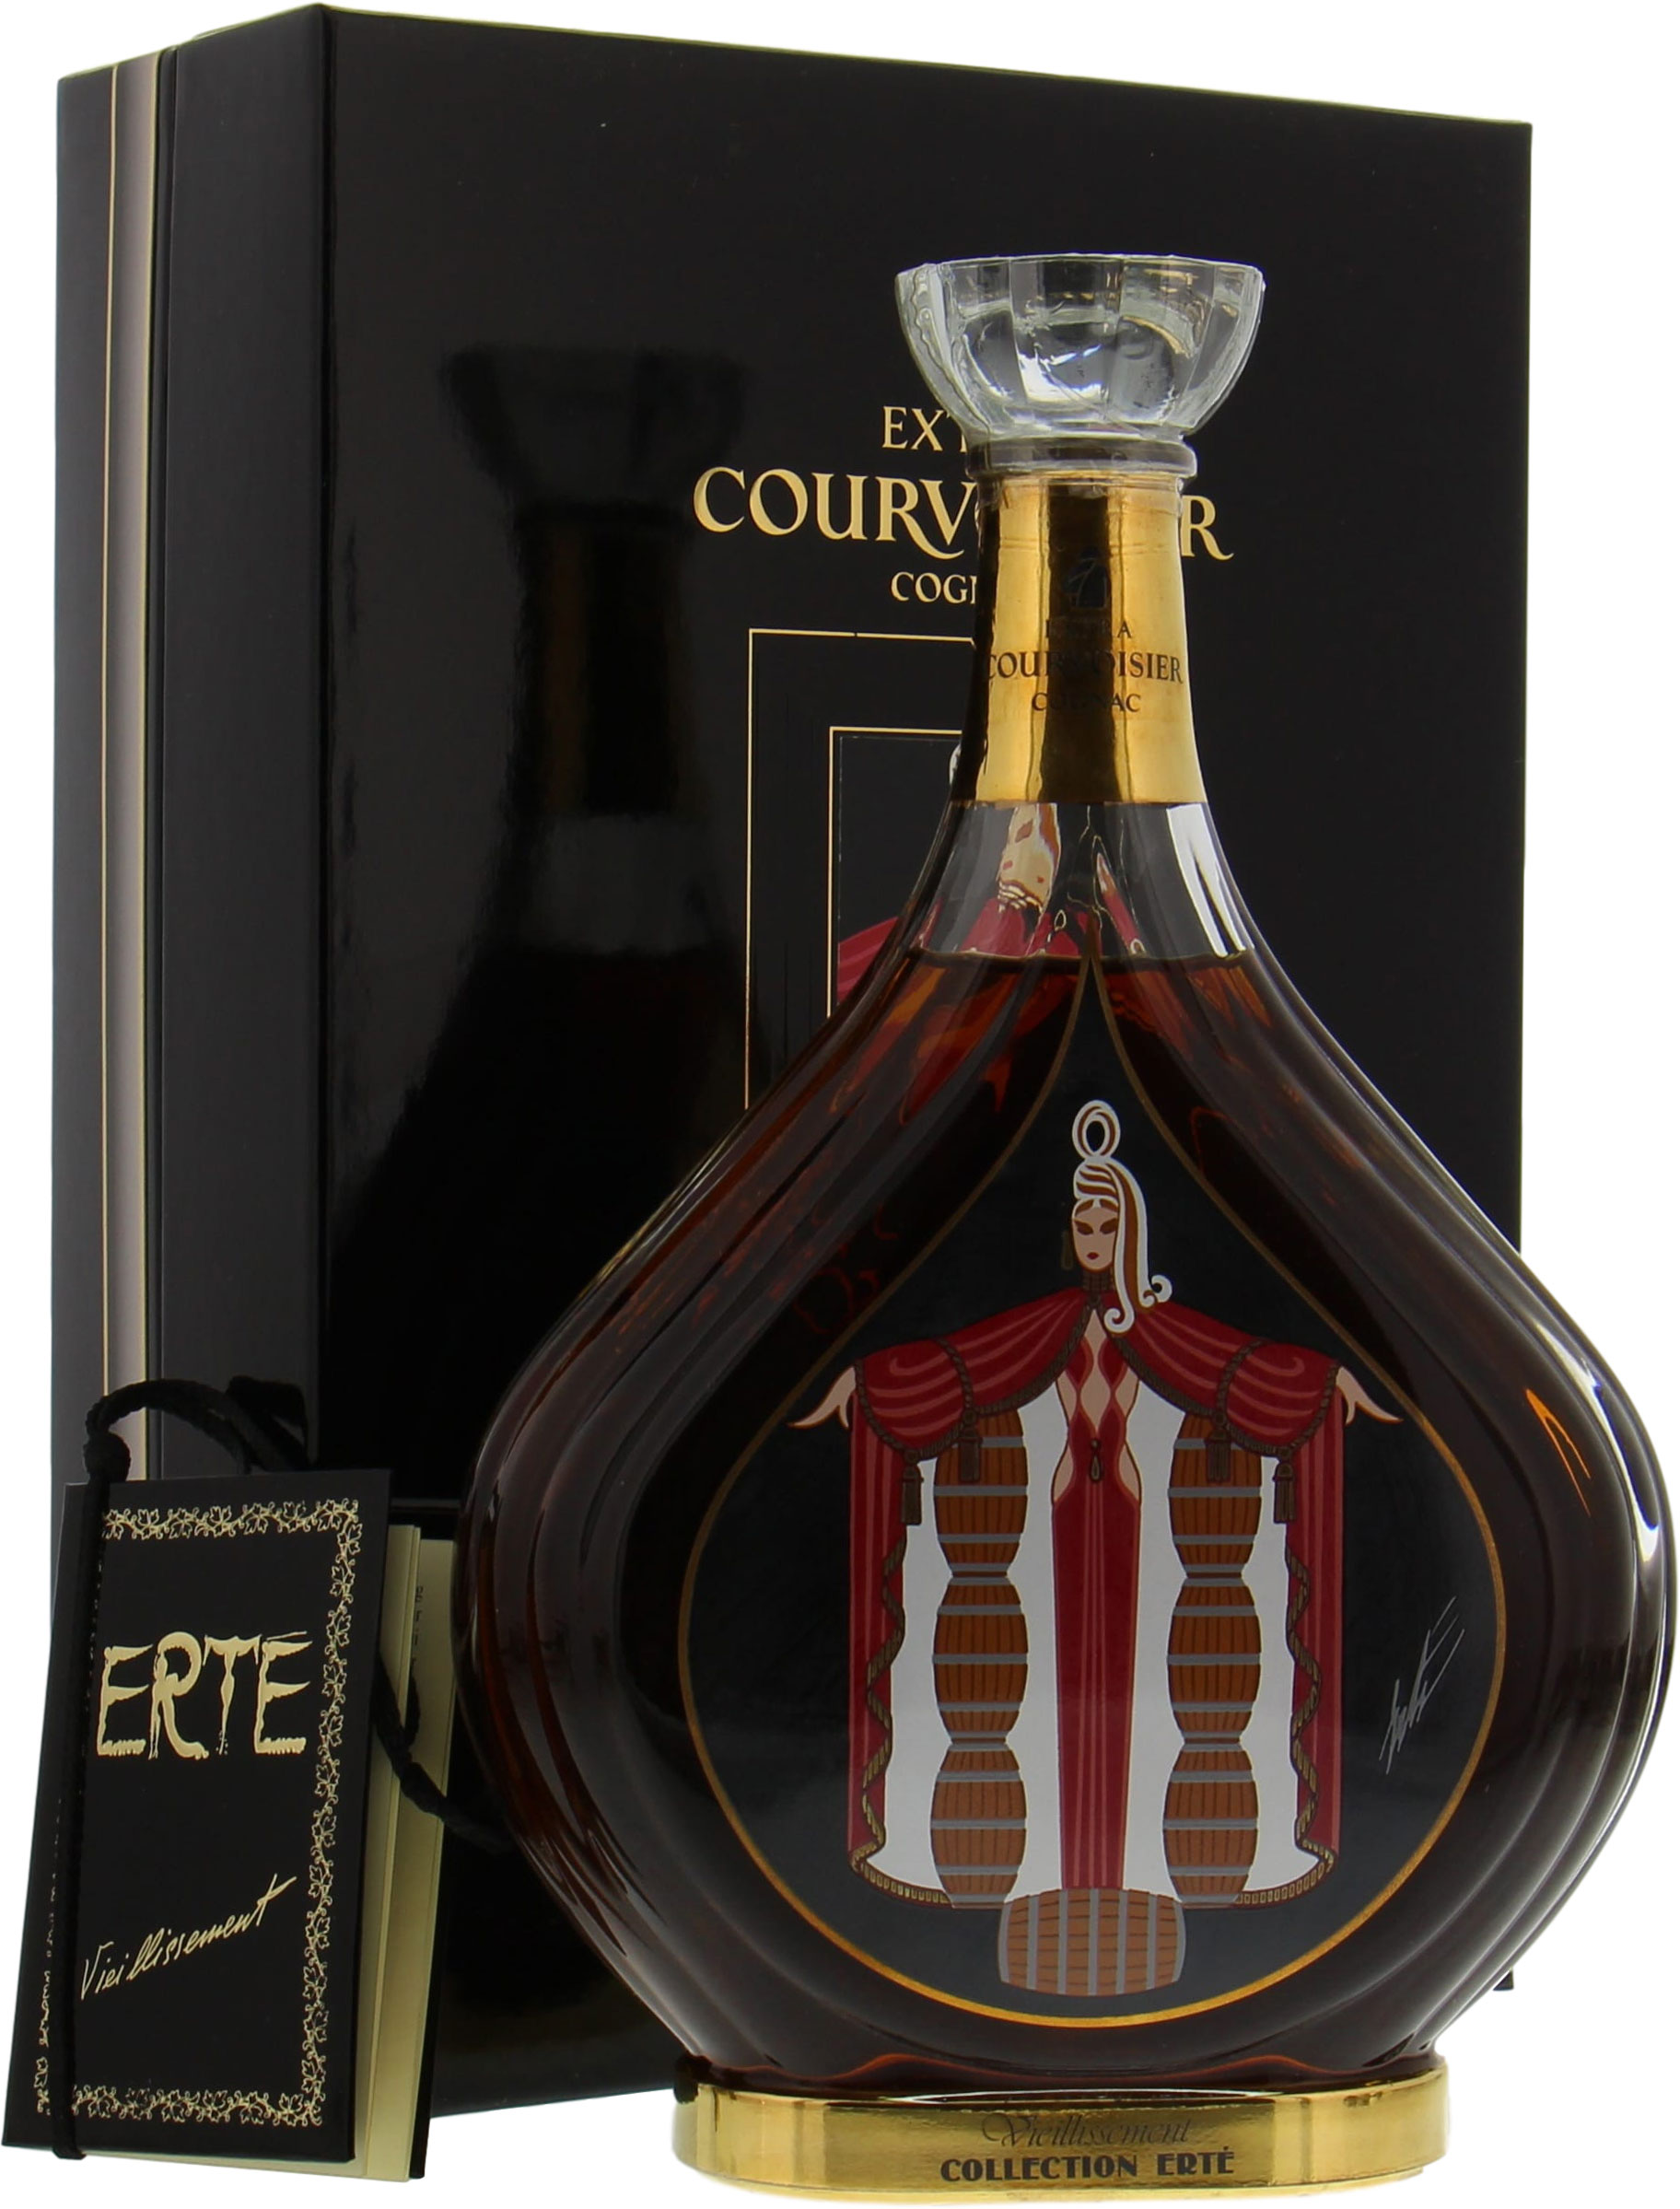 Courvoisier Cognac - Erte no 4 NV